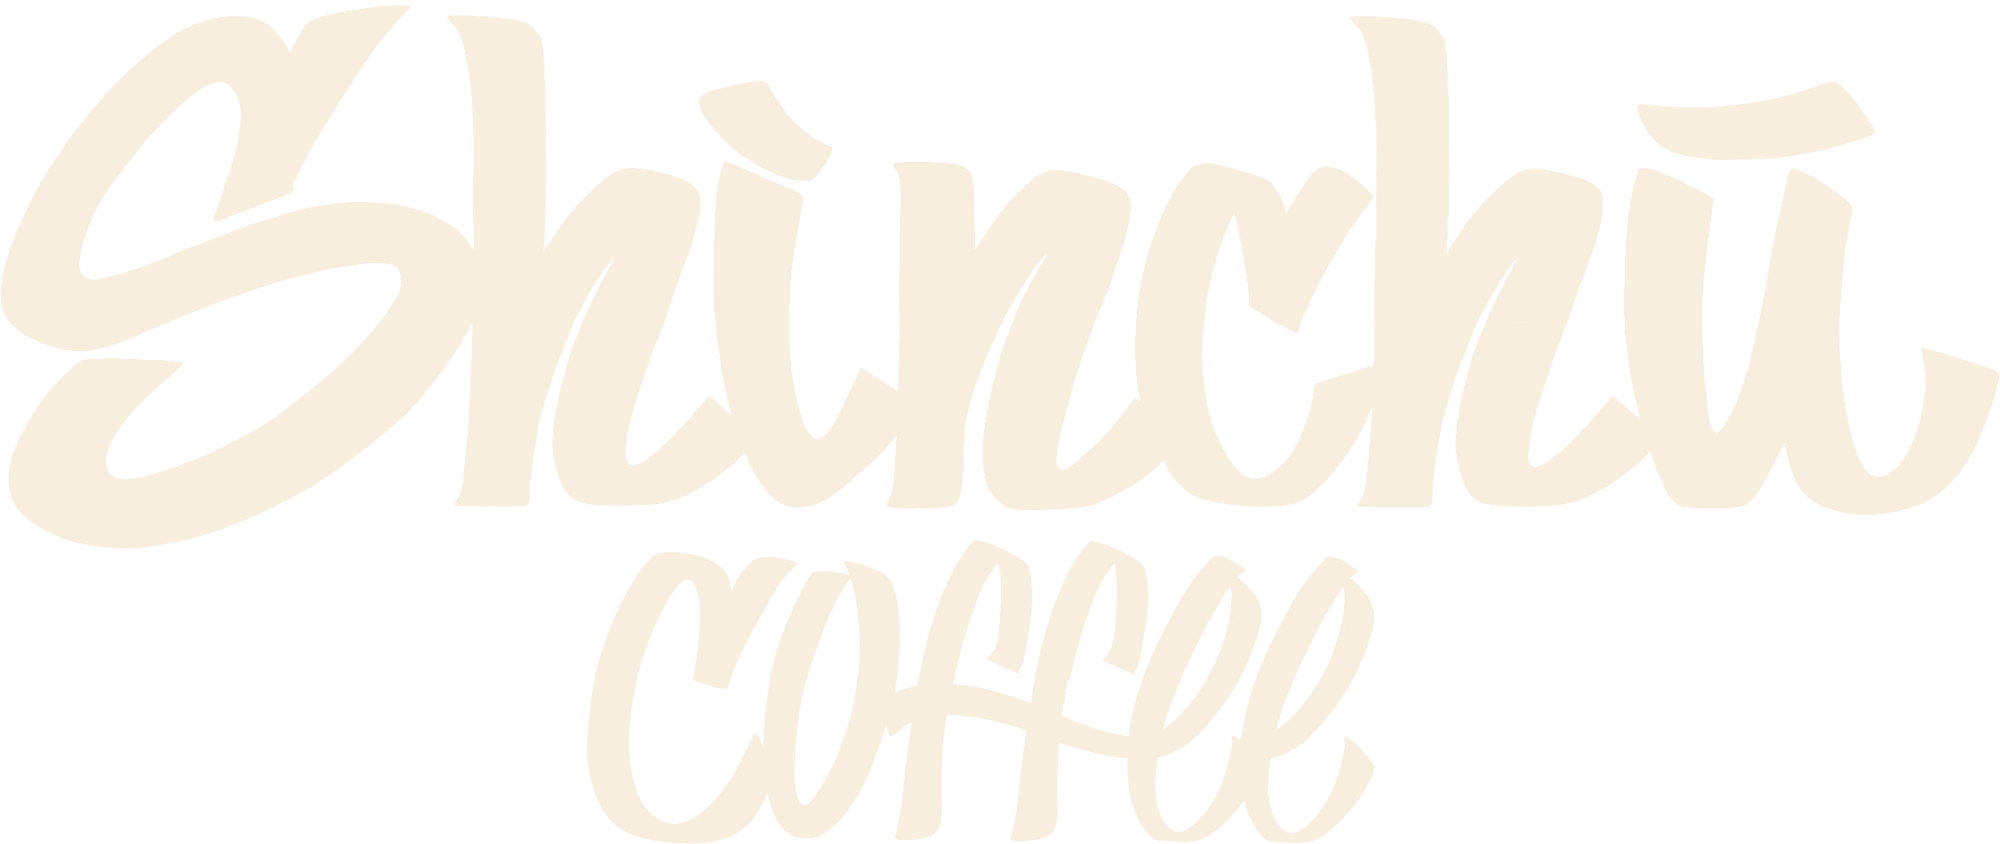 Shinchū Coffee